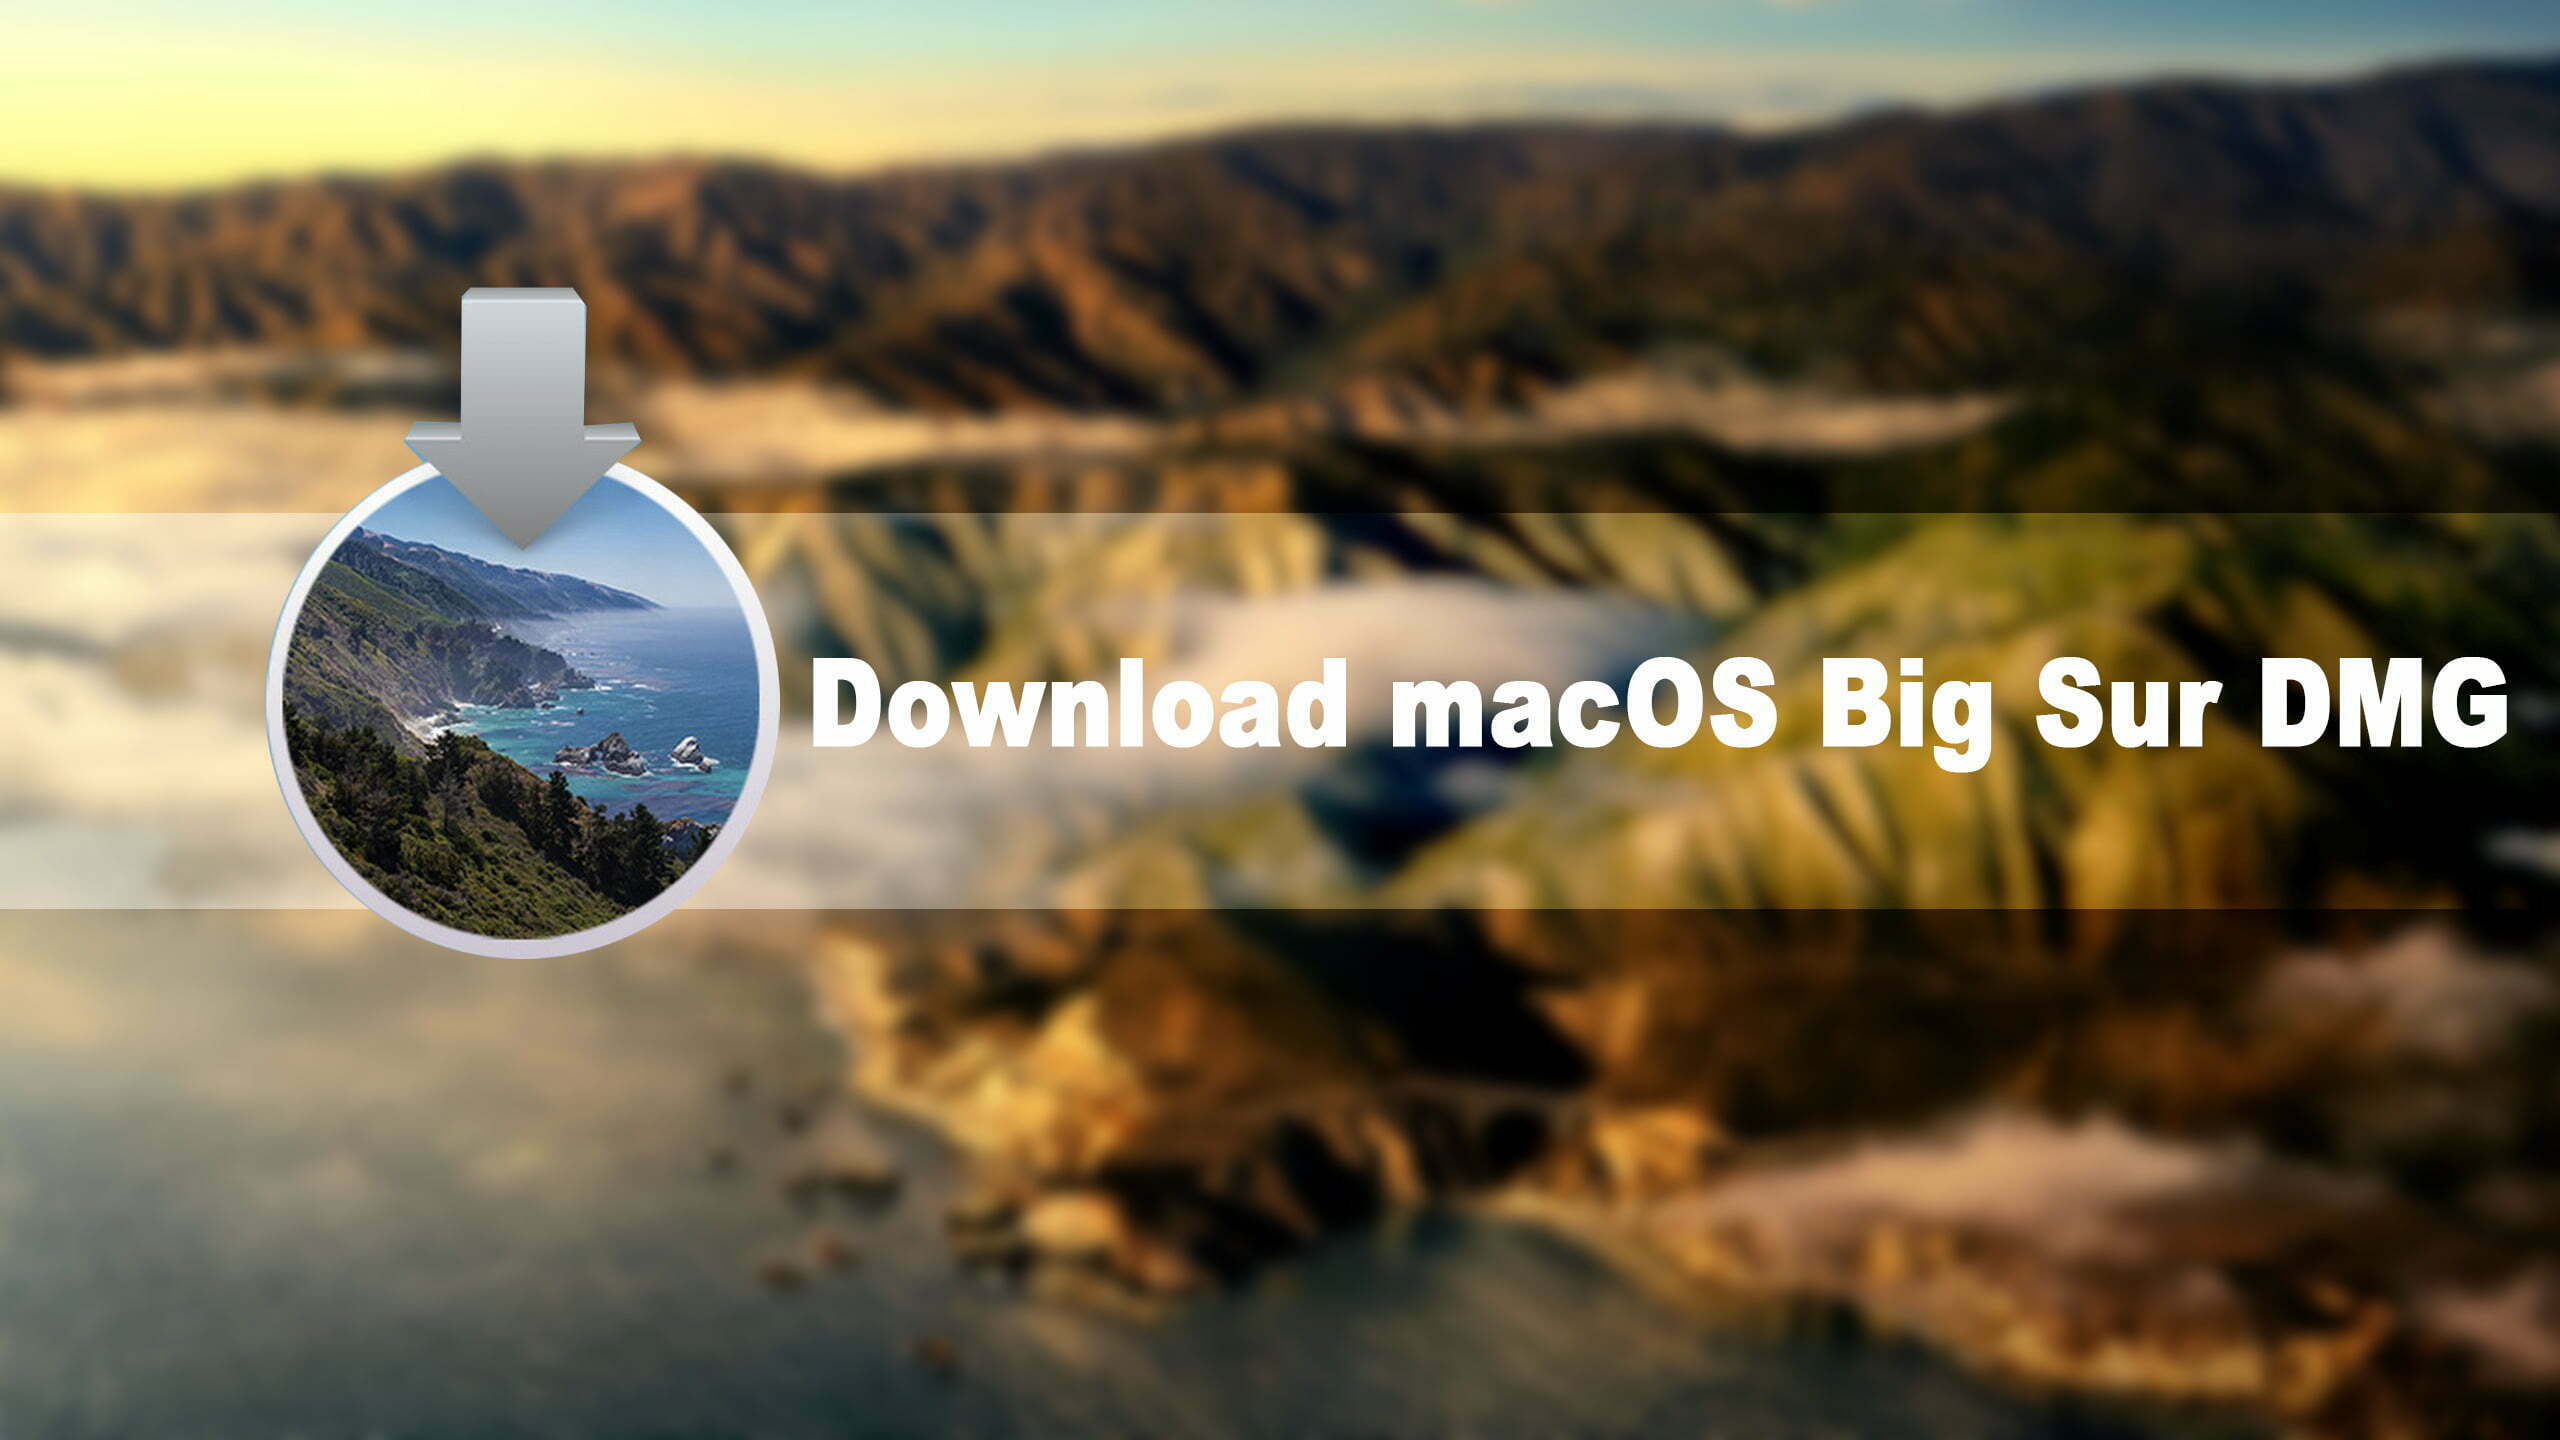 Download macOS Big Sur DMG File - Final Version